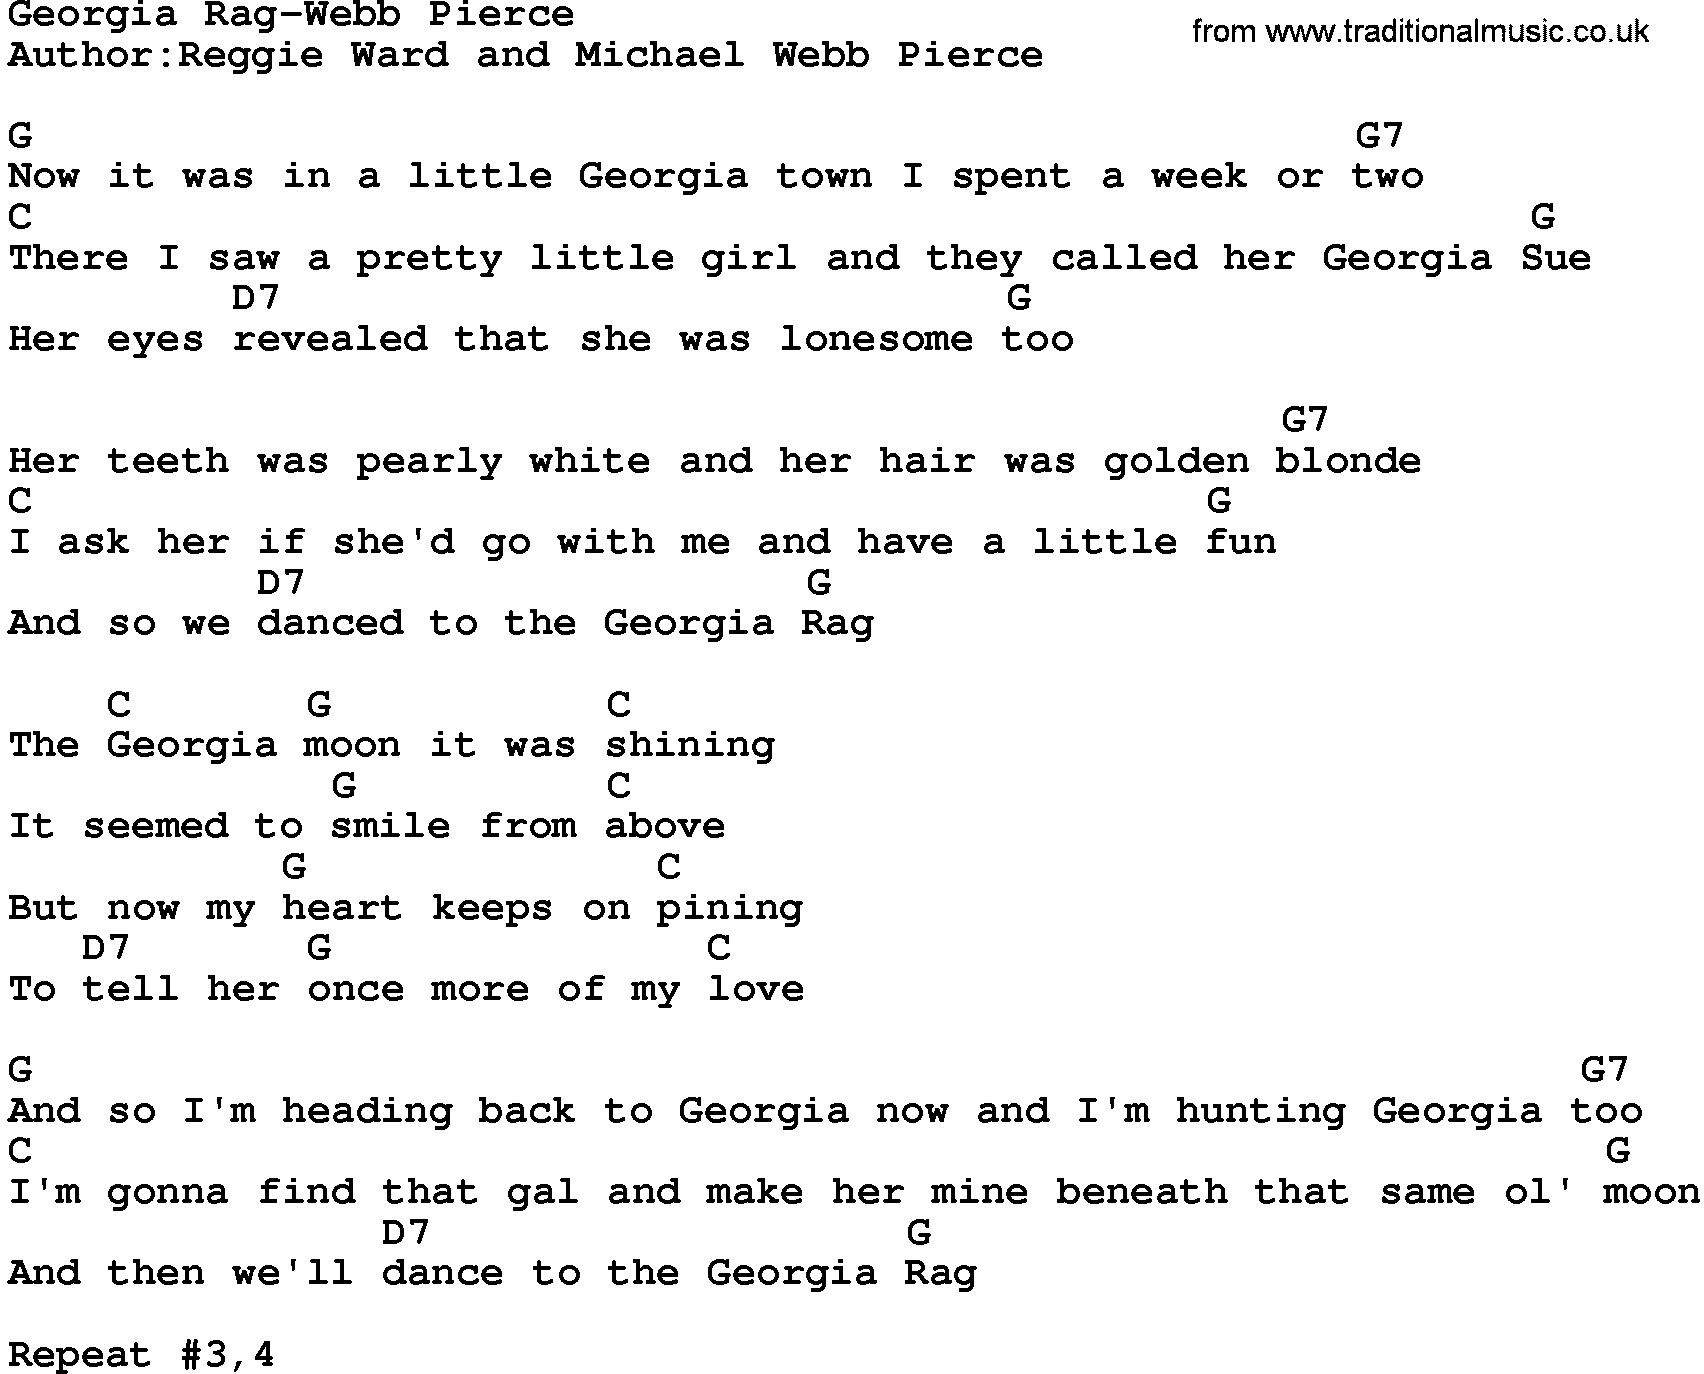 Country music song: Georgia Rag-Webb Pierce lyrics and chords